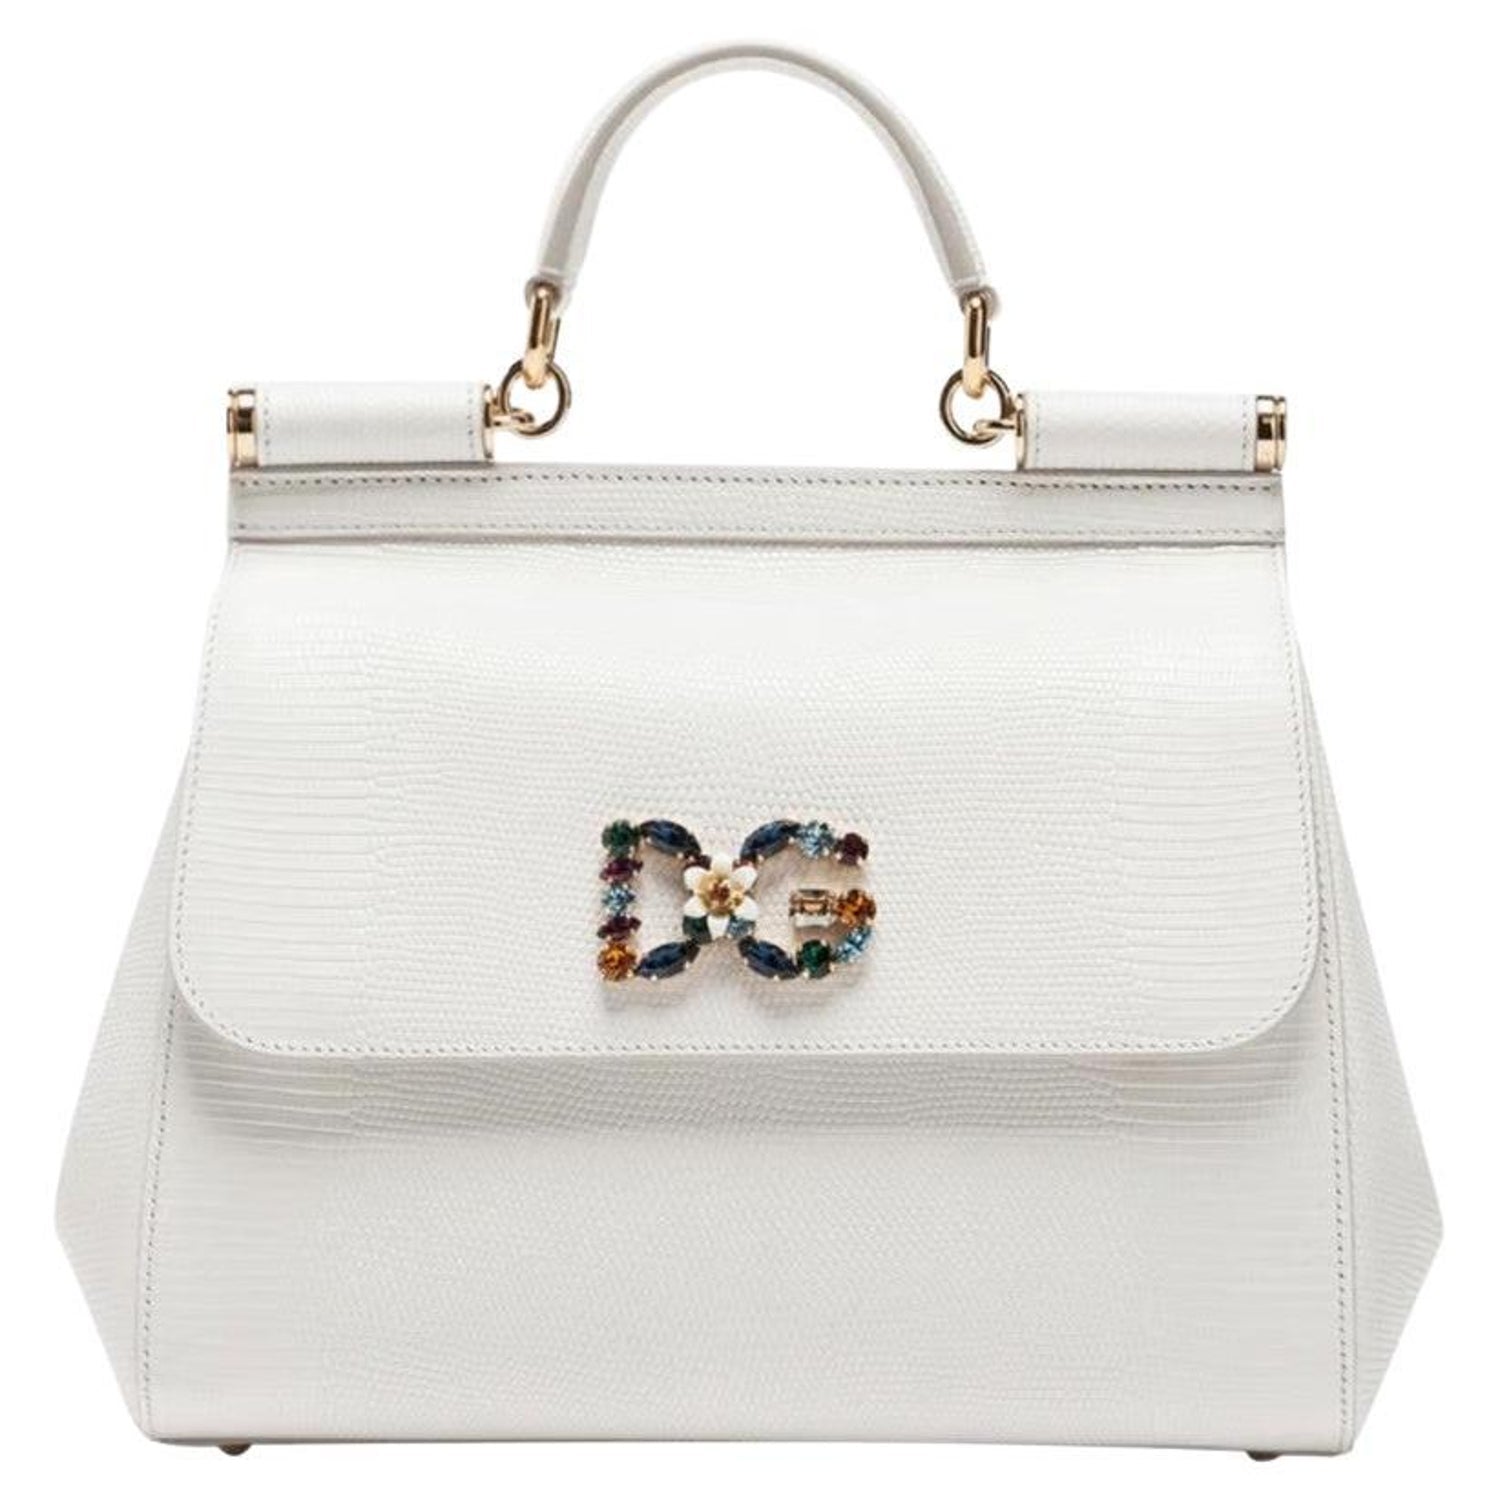 Dolce & Gabbana You Make Me Love You Miss Sicily Small Handbag - New